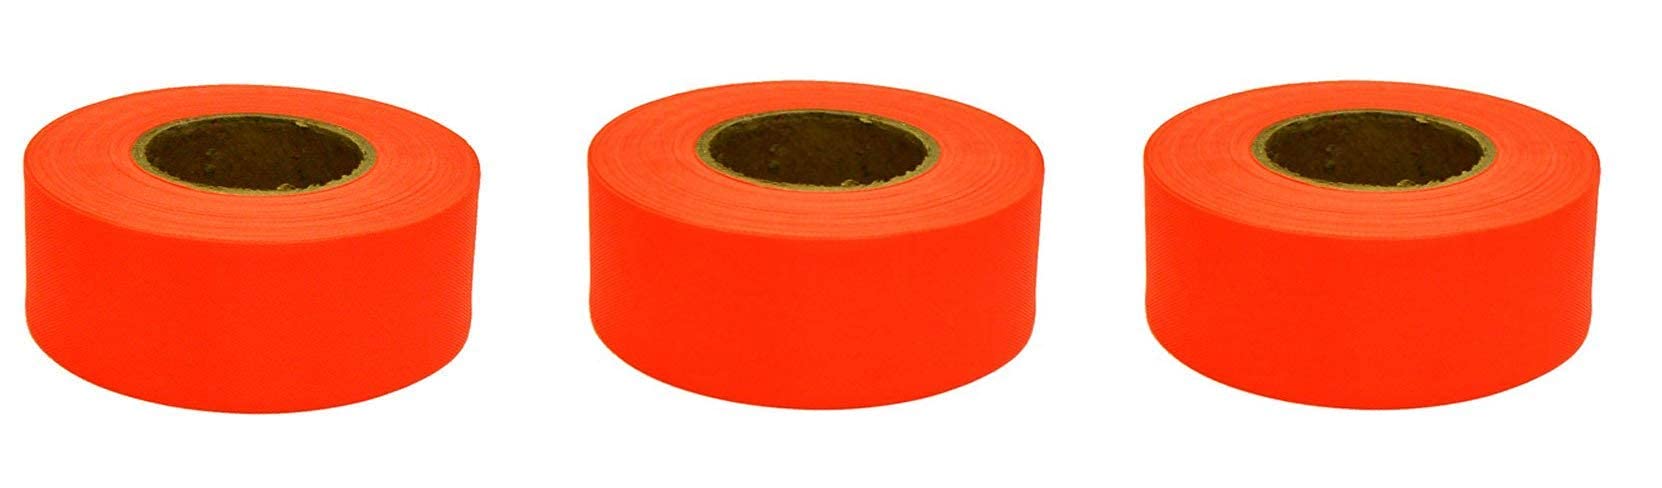 CH Hanson Fluorescent Orange Flagging Tape (3-Pack)